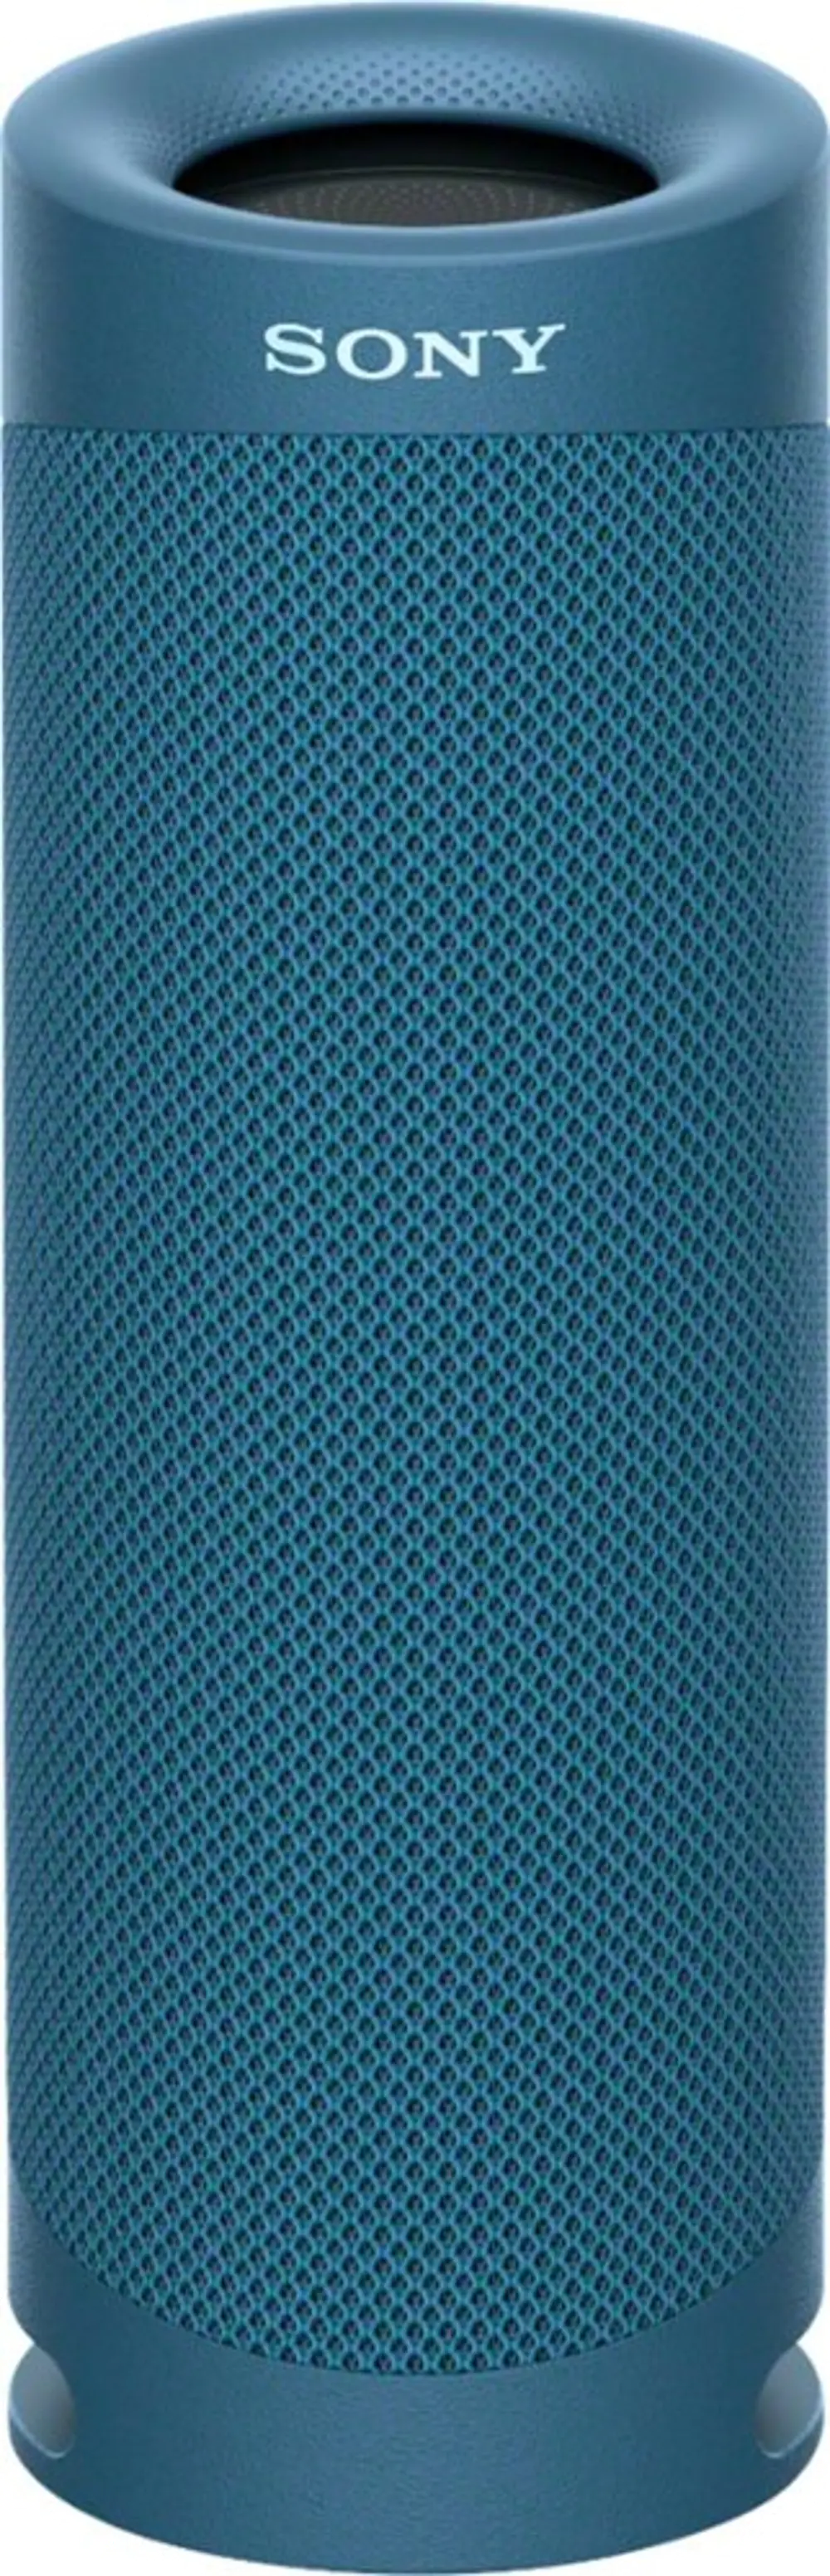 SRSXB23.BLUE Sony Blue Waterproof Portable Speaker with Extra Bass - XB23-1